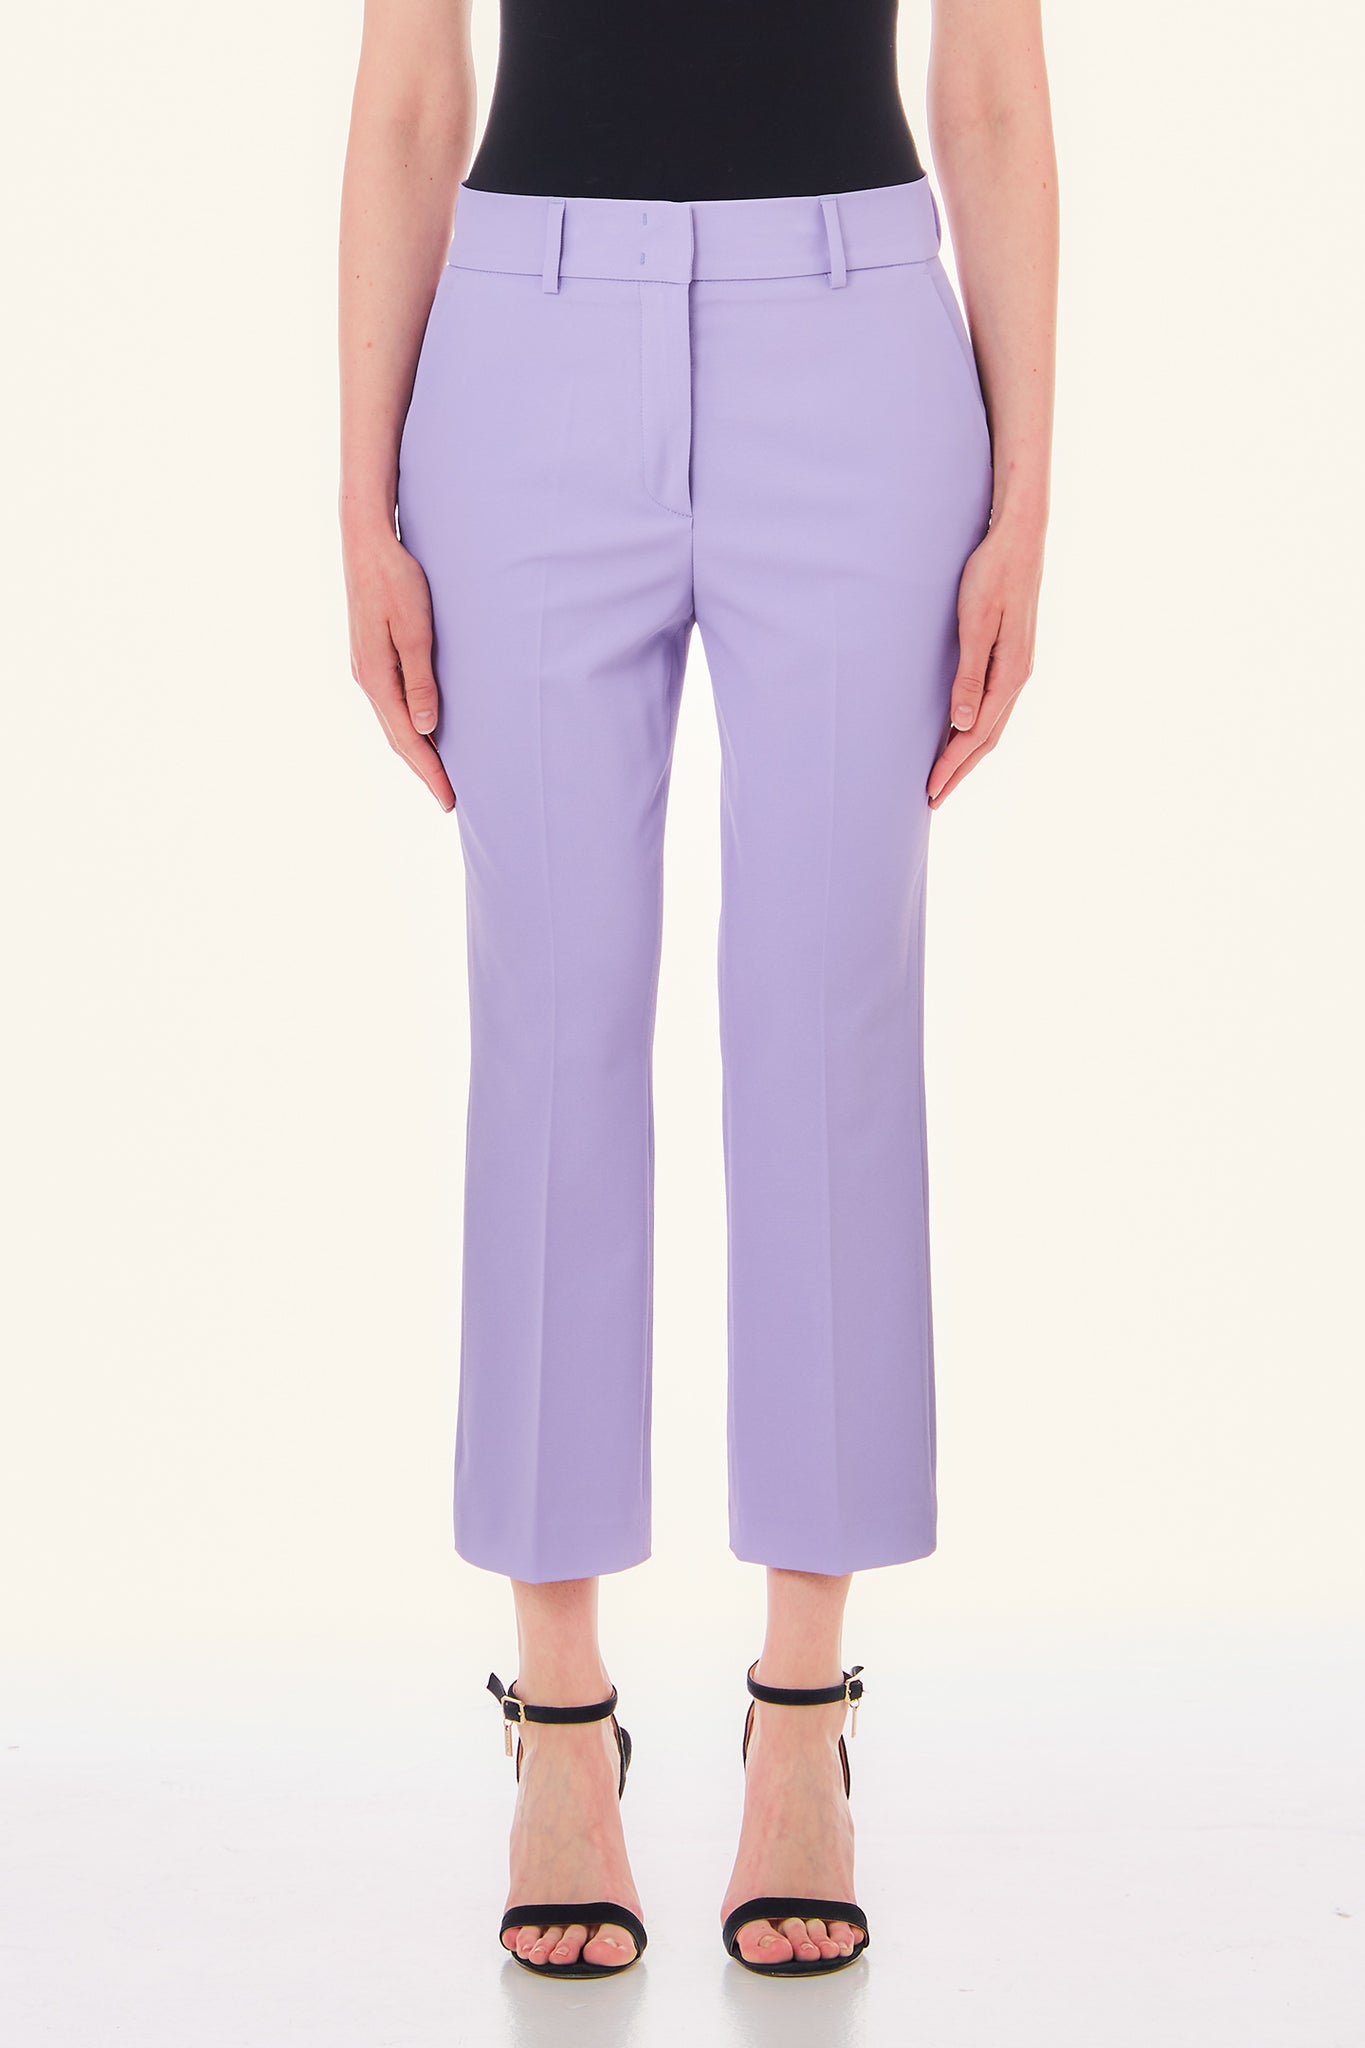 Pantalone Cropped Stretch / Lilla - Ideal Moda